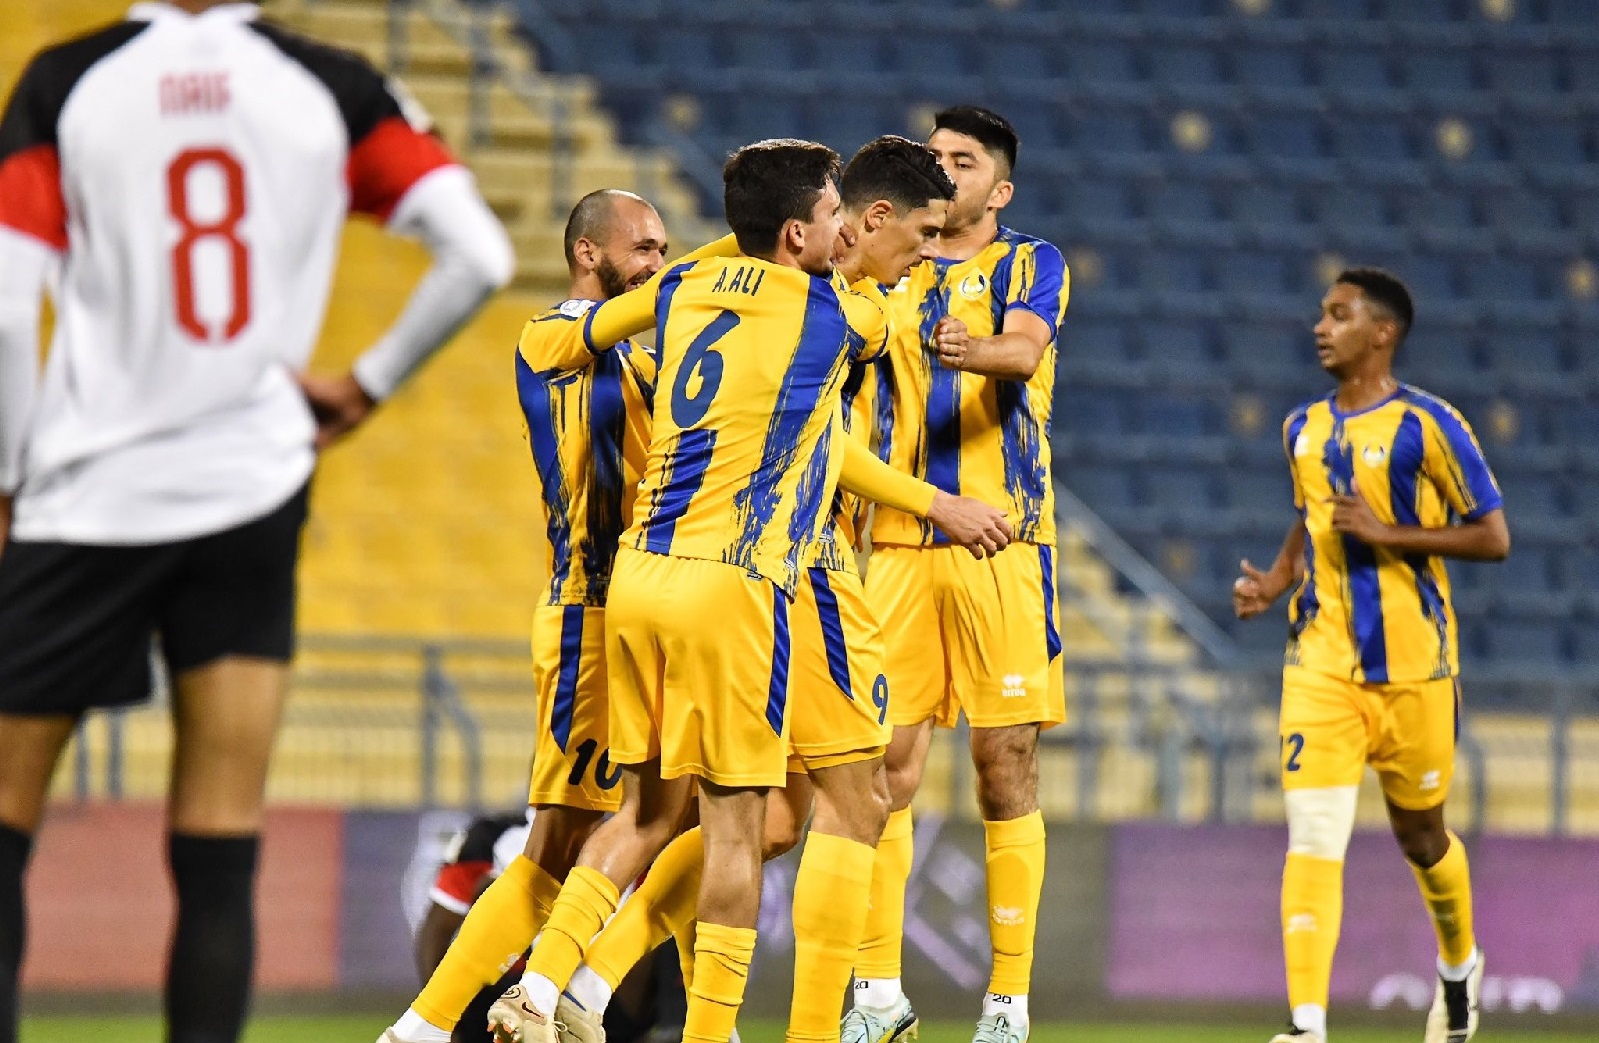 Mehdi Tahrat scores a world class goal in the Qatari league